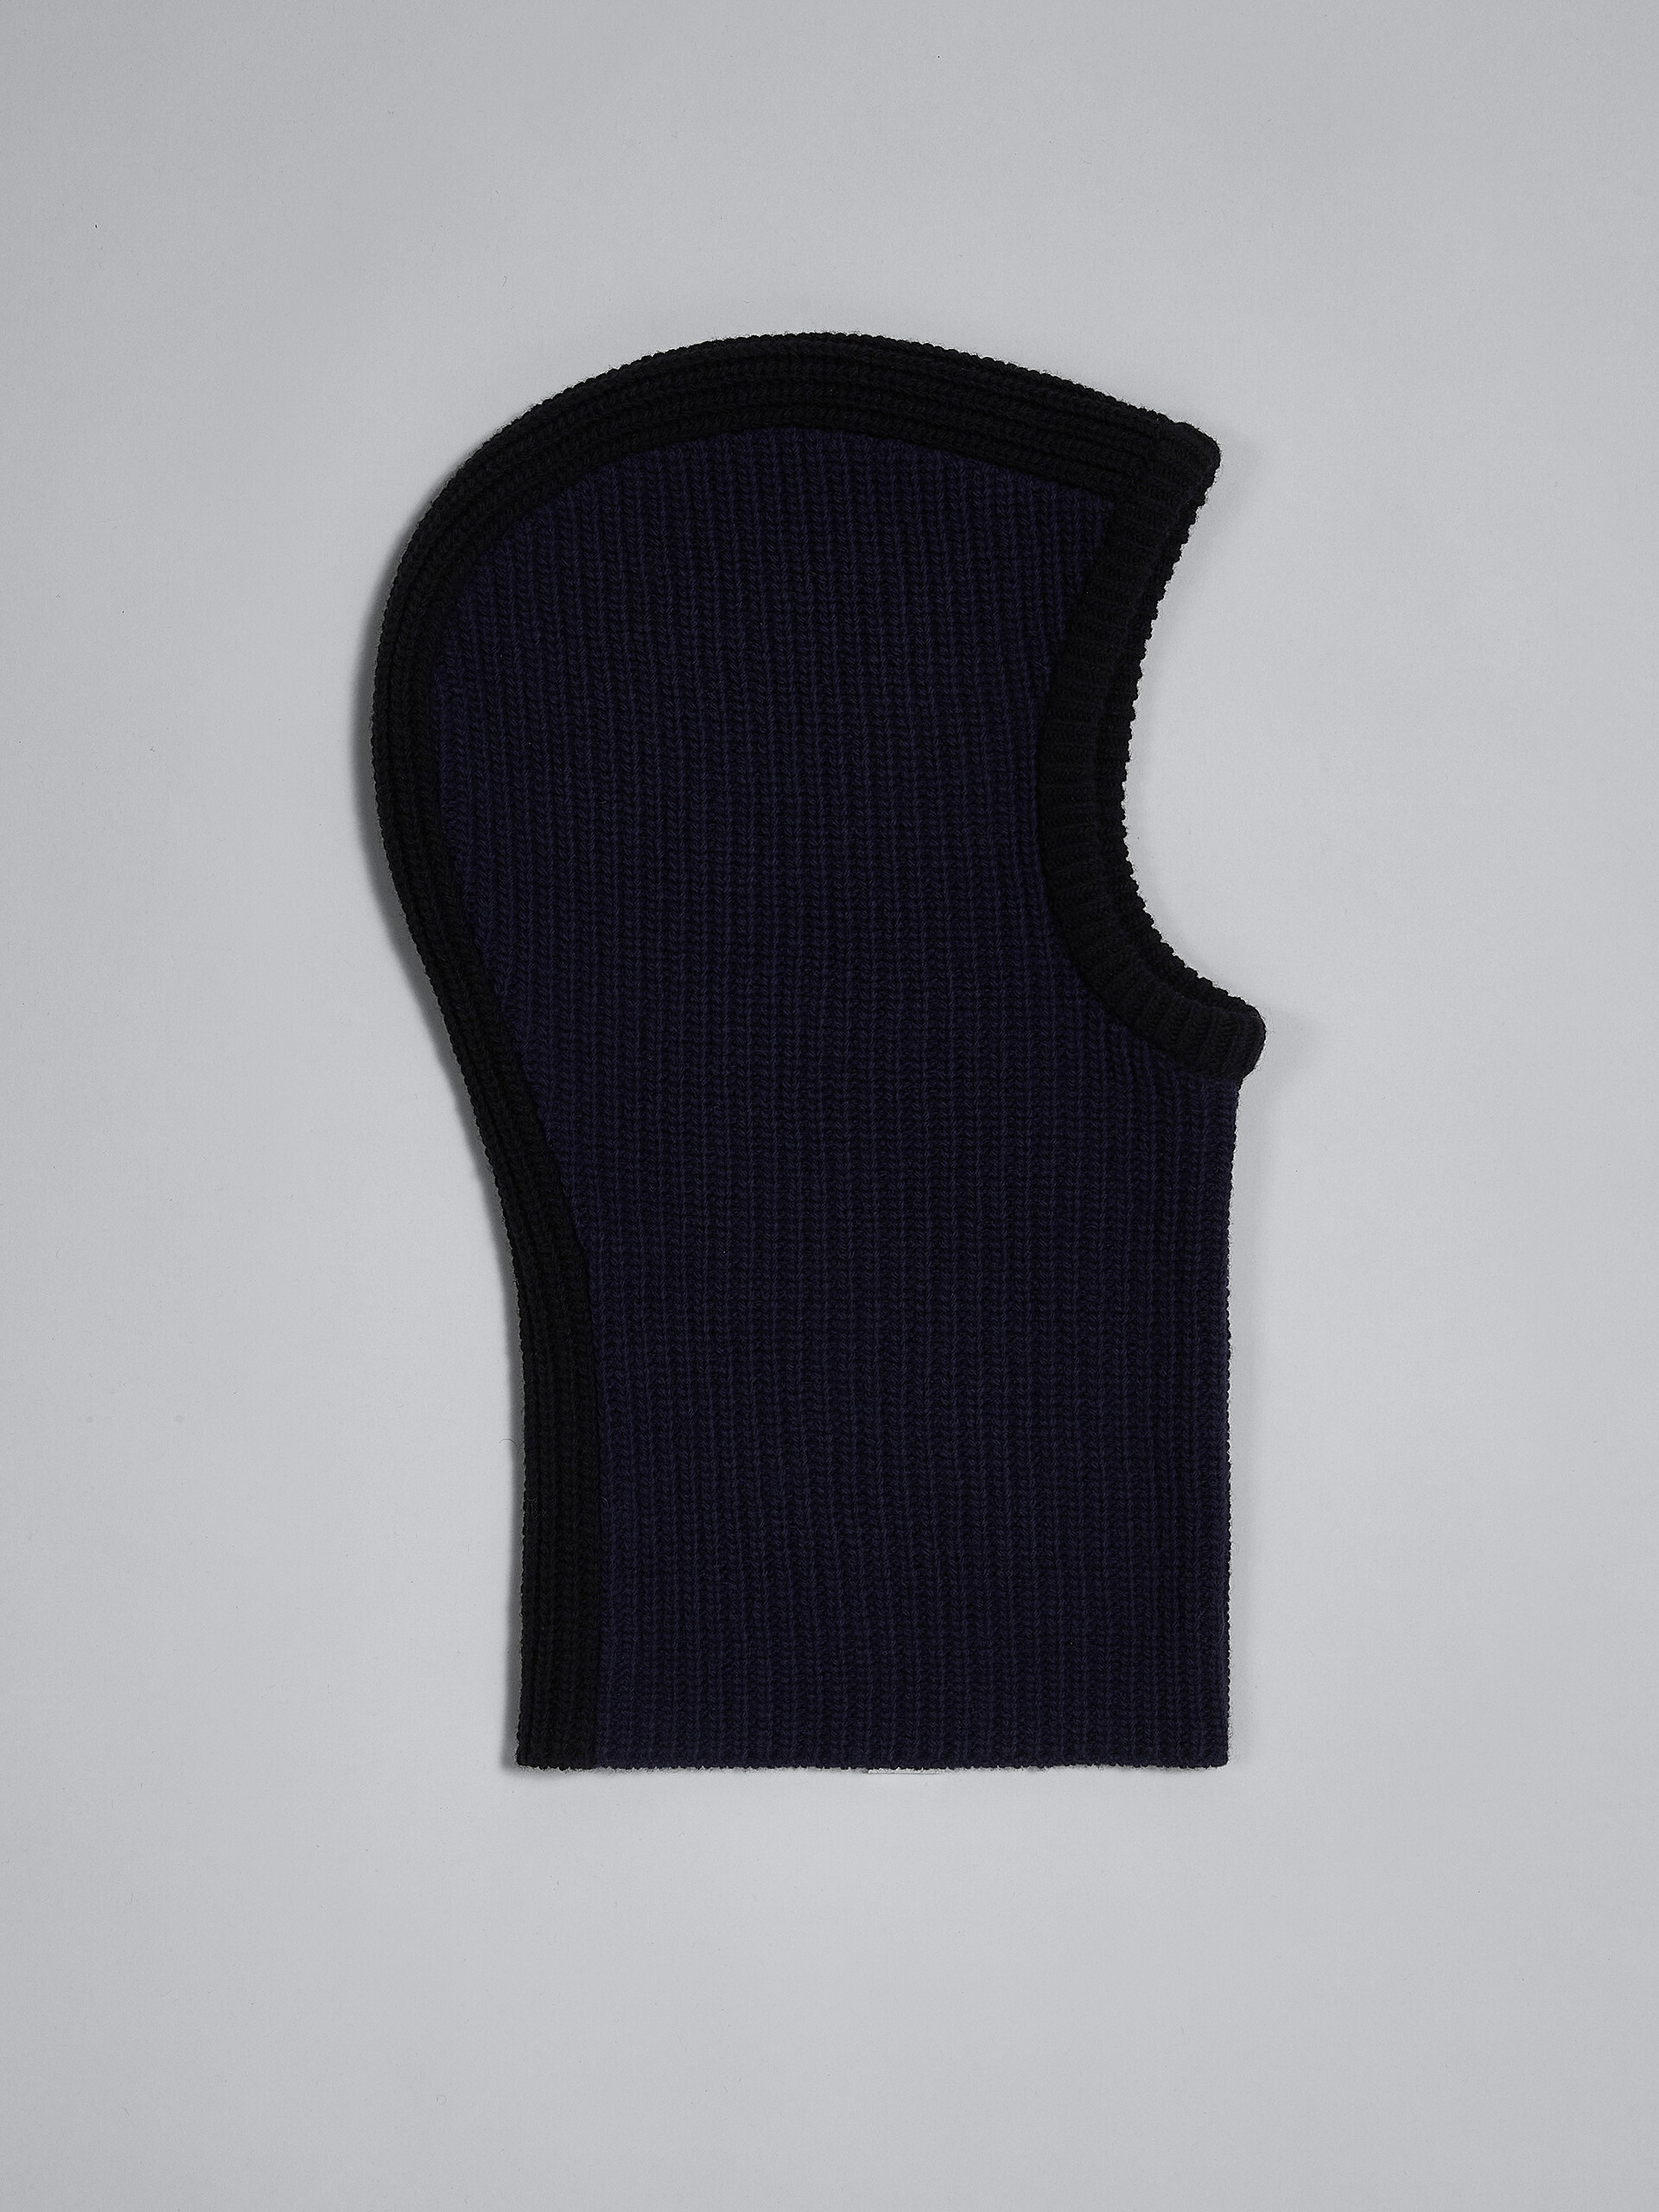 Passamontagna in lana Shetland blu - Altri accessori - Image 2